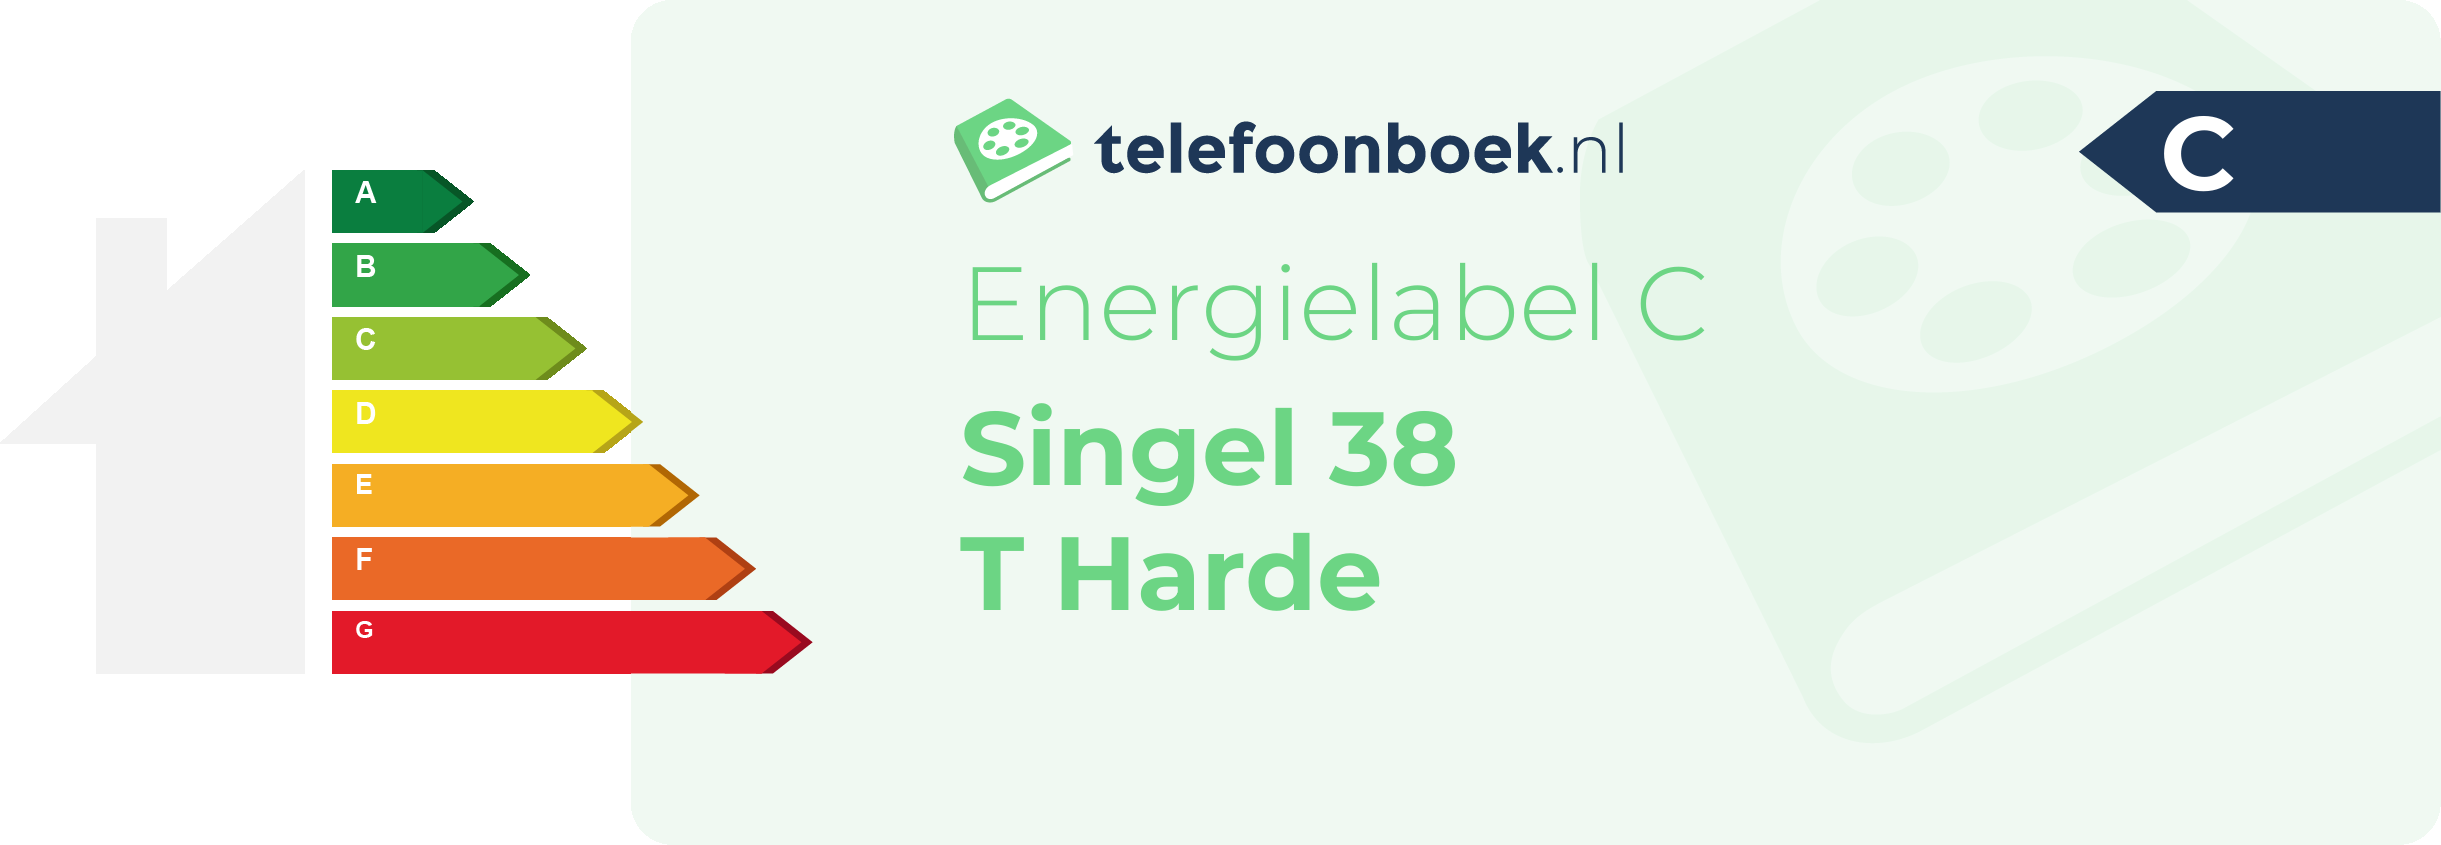 Energielabel Singel 38 T Harde